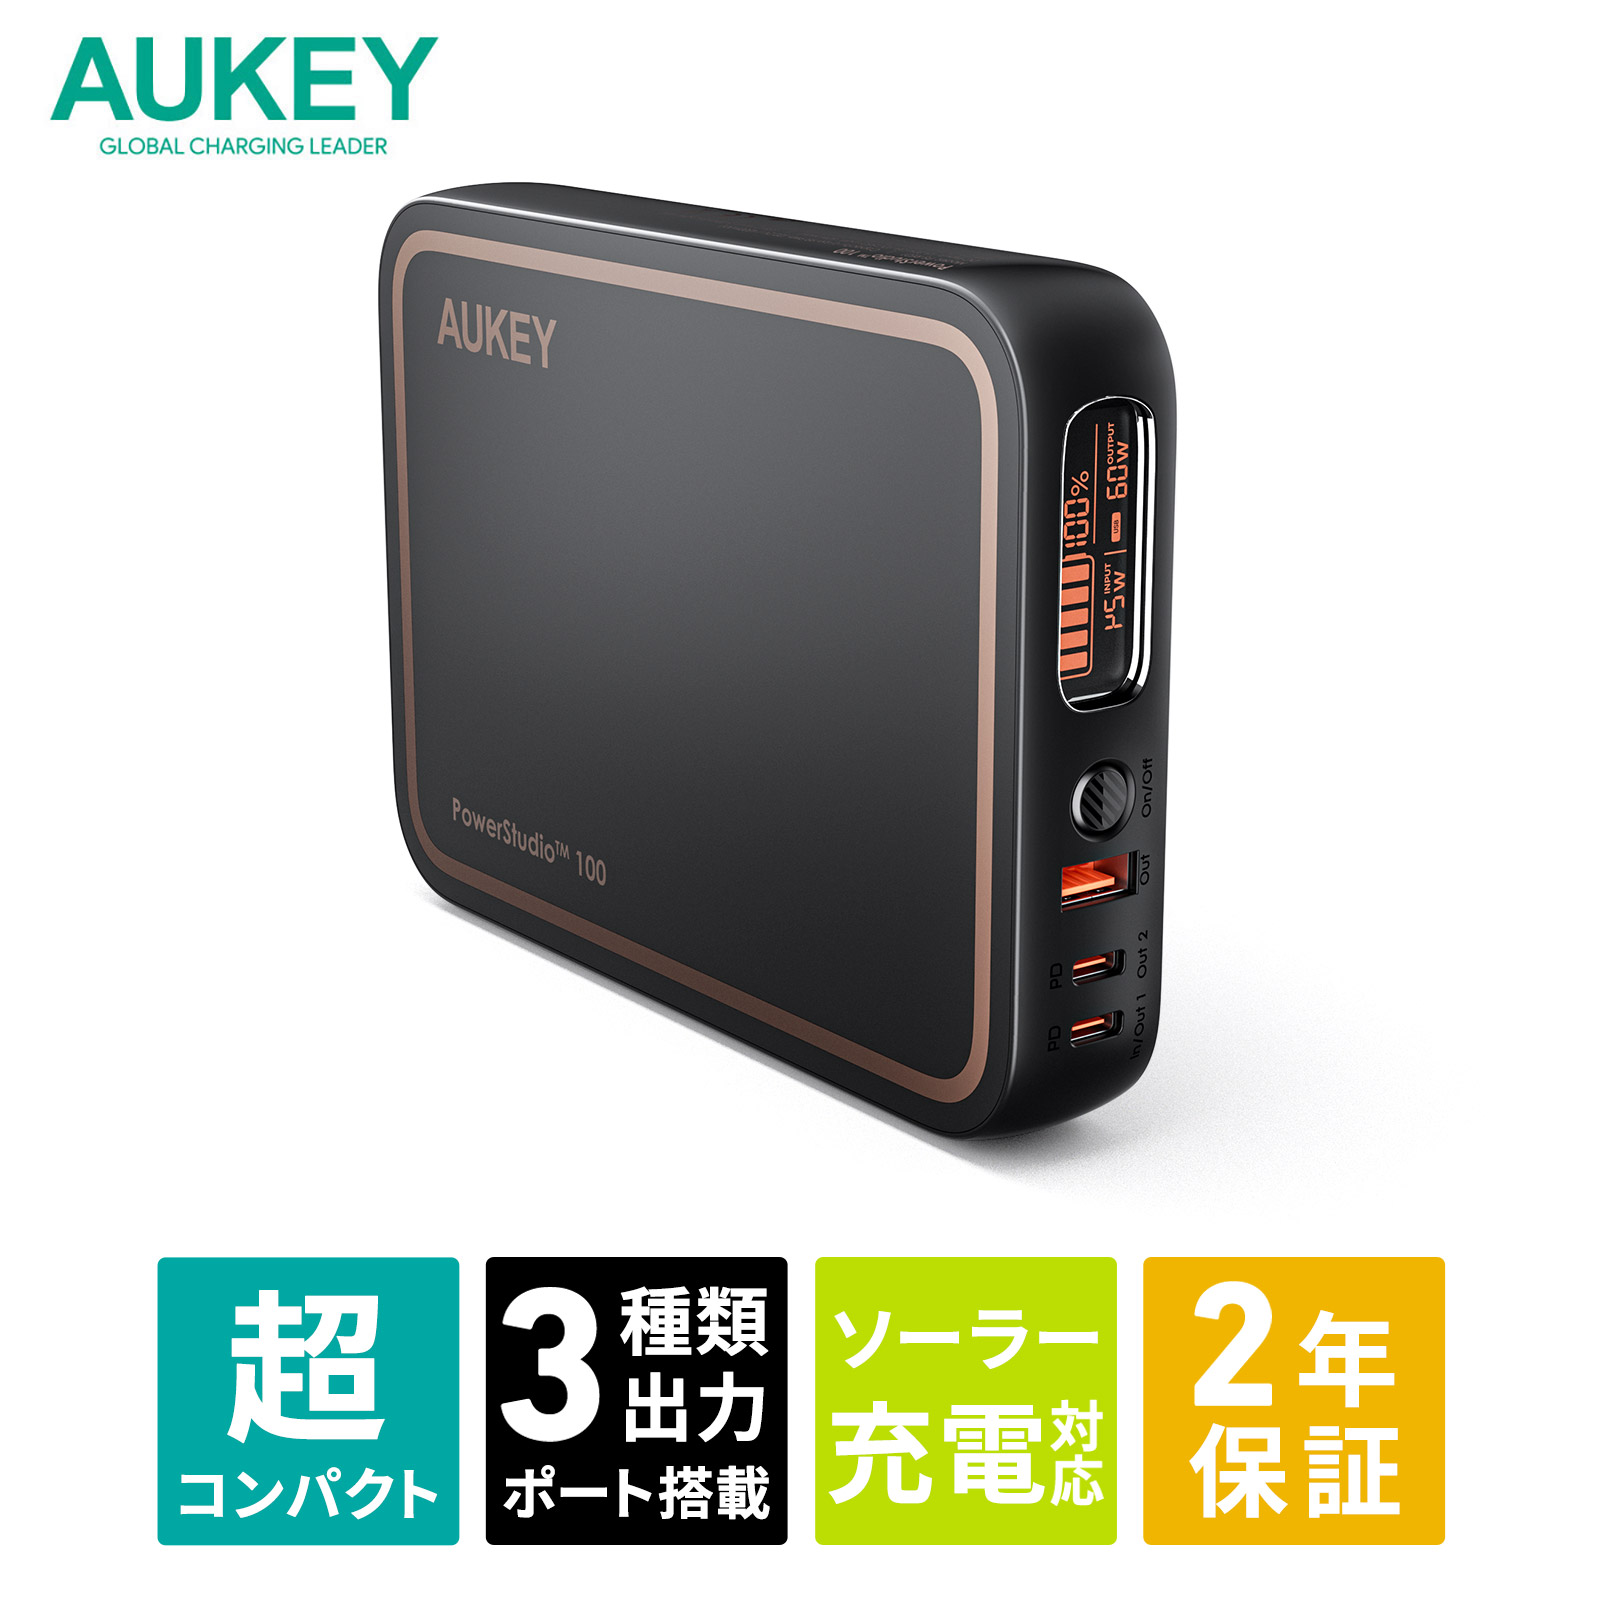 AUKEY オーキー POWERSTUDIO 300 PS-RE03 - バッテリー/充電器